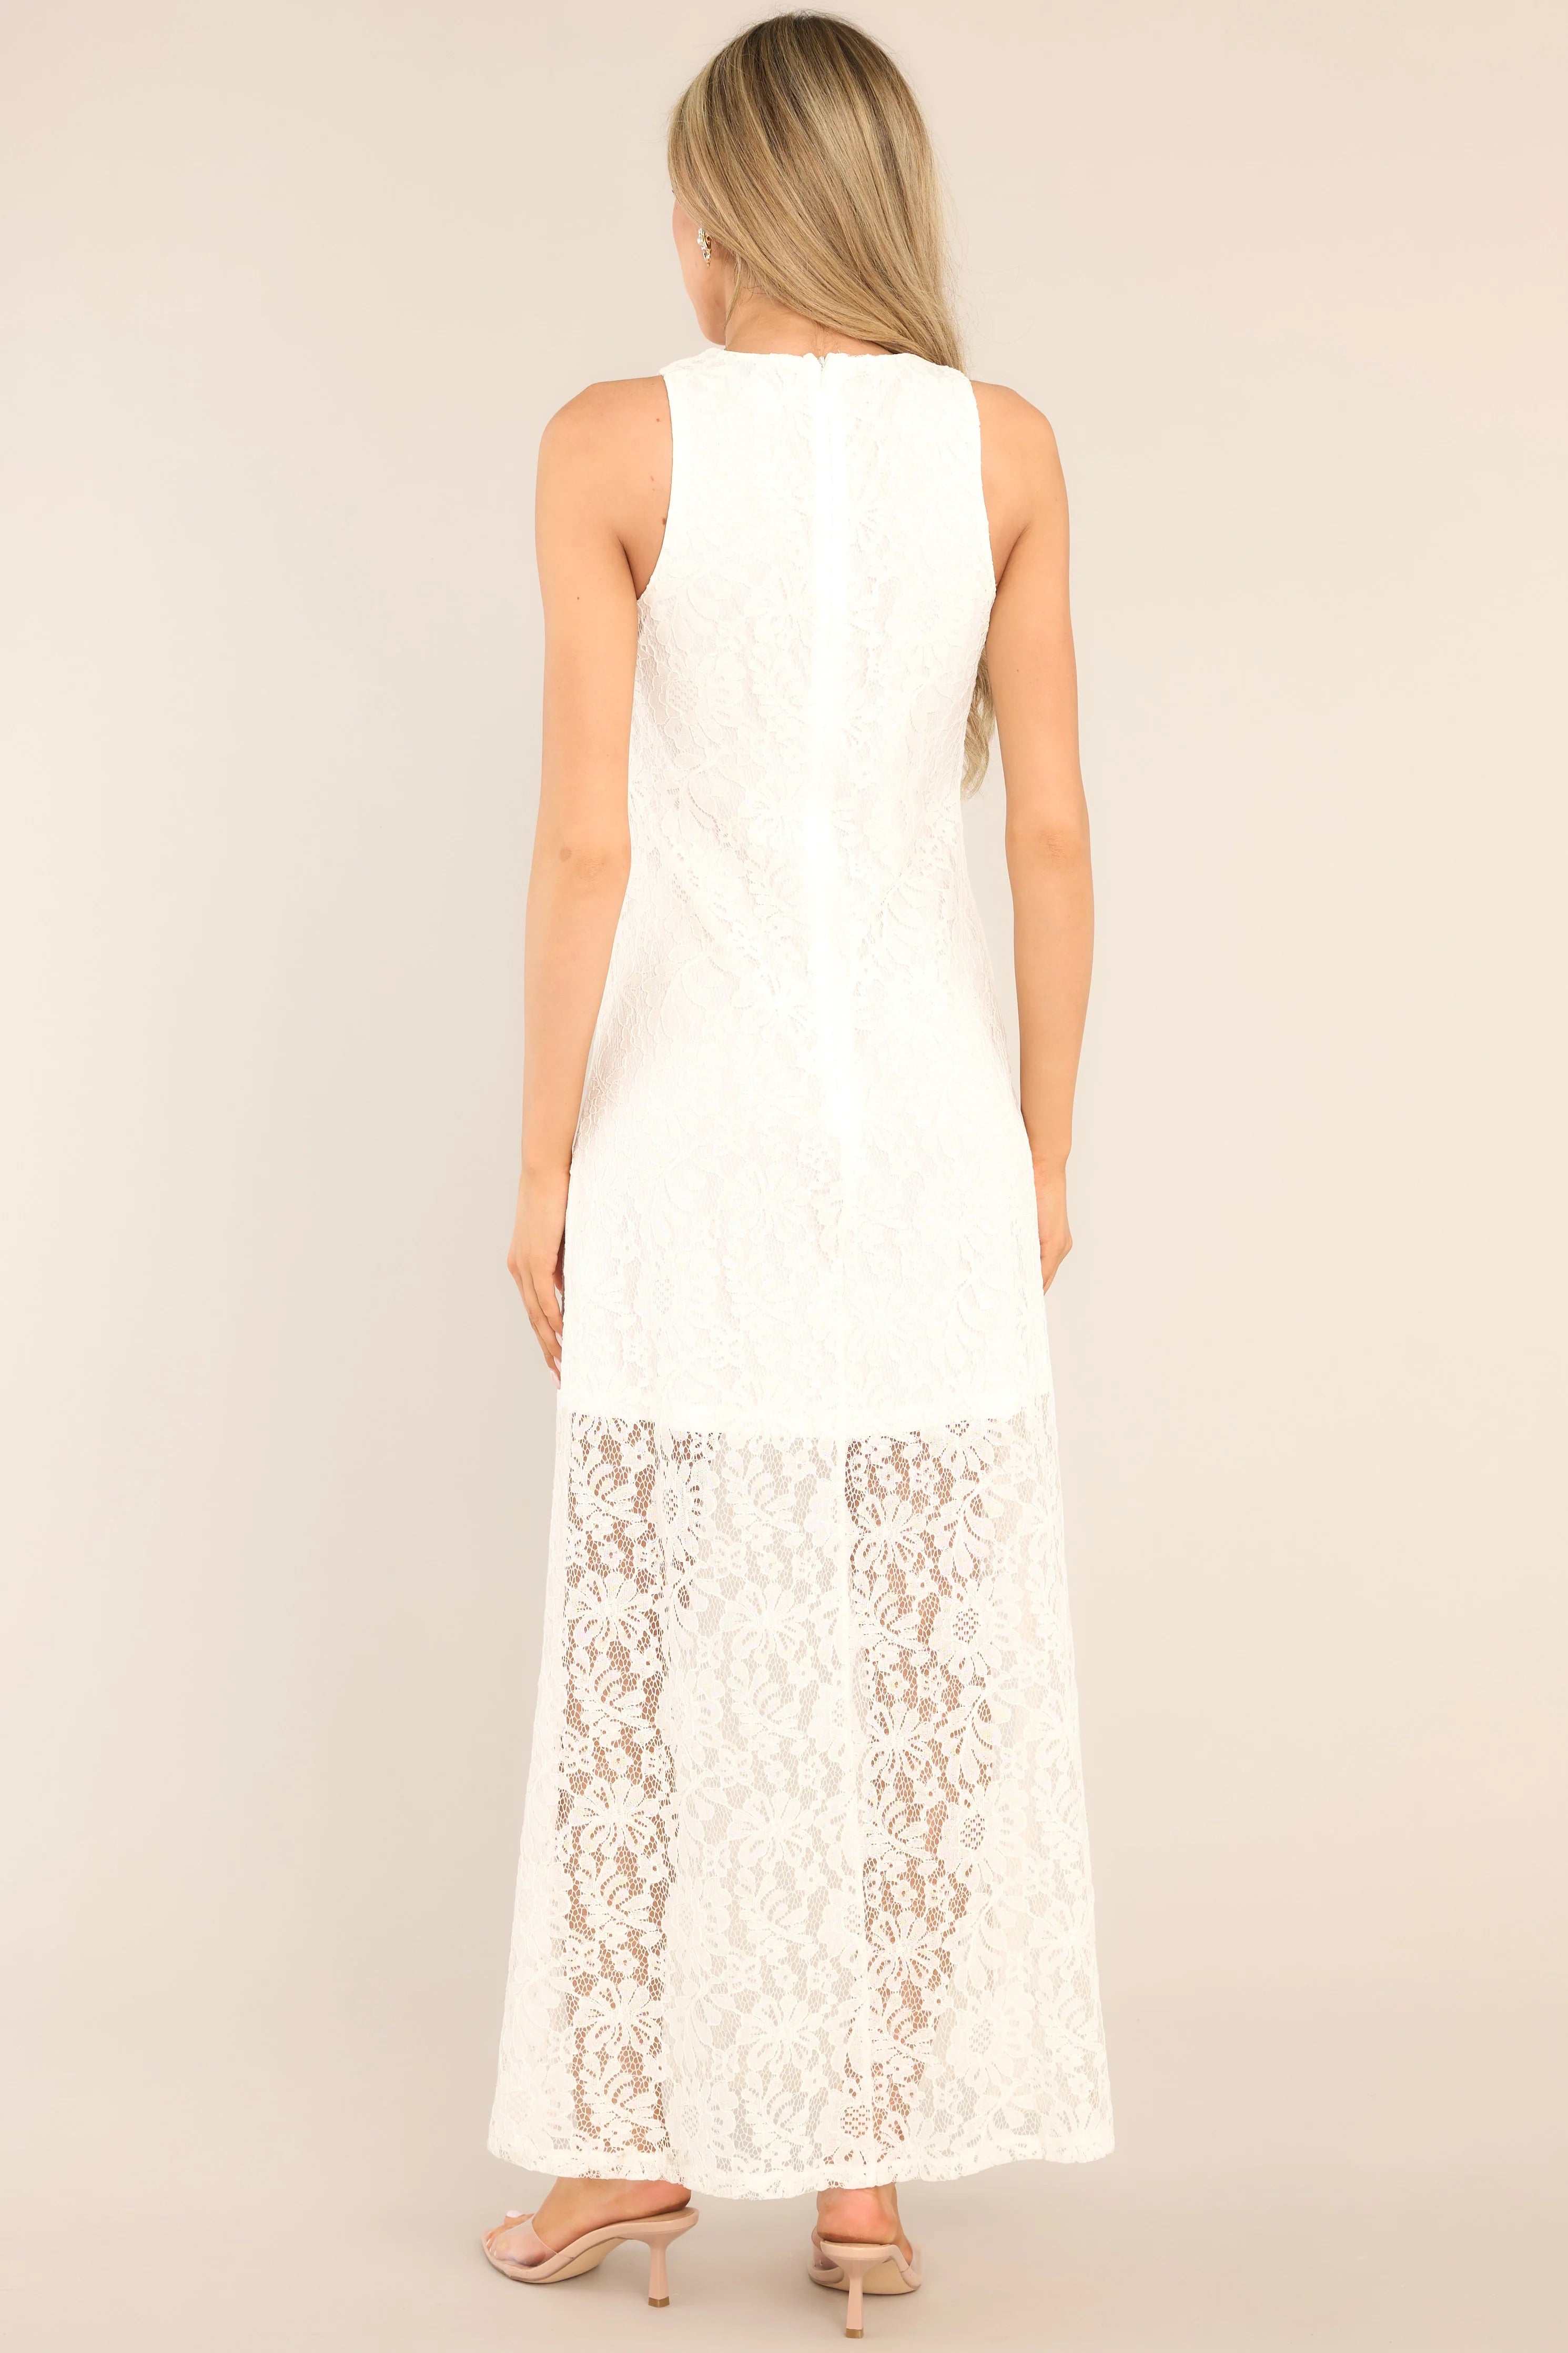 Irresistible Charm White Lace Maxi Dress